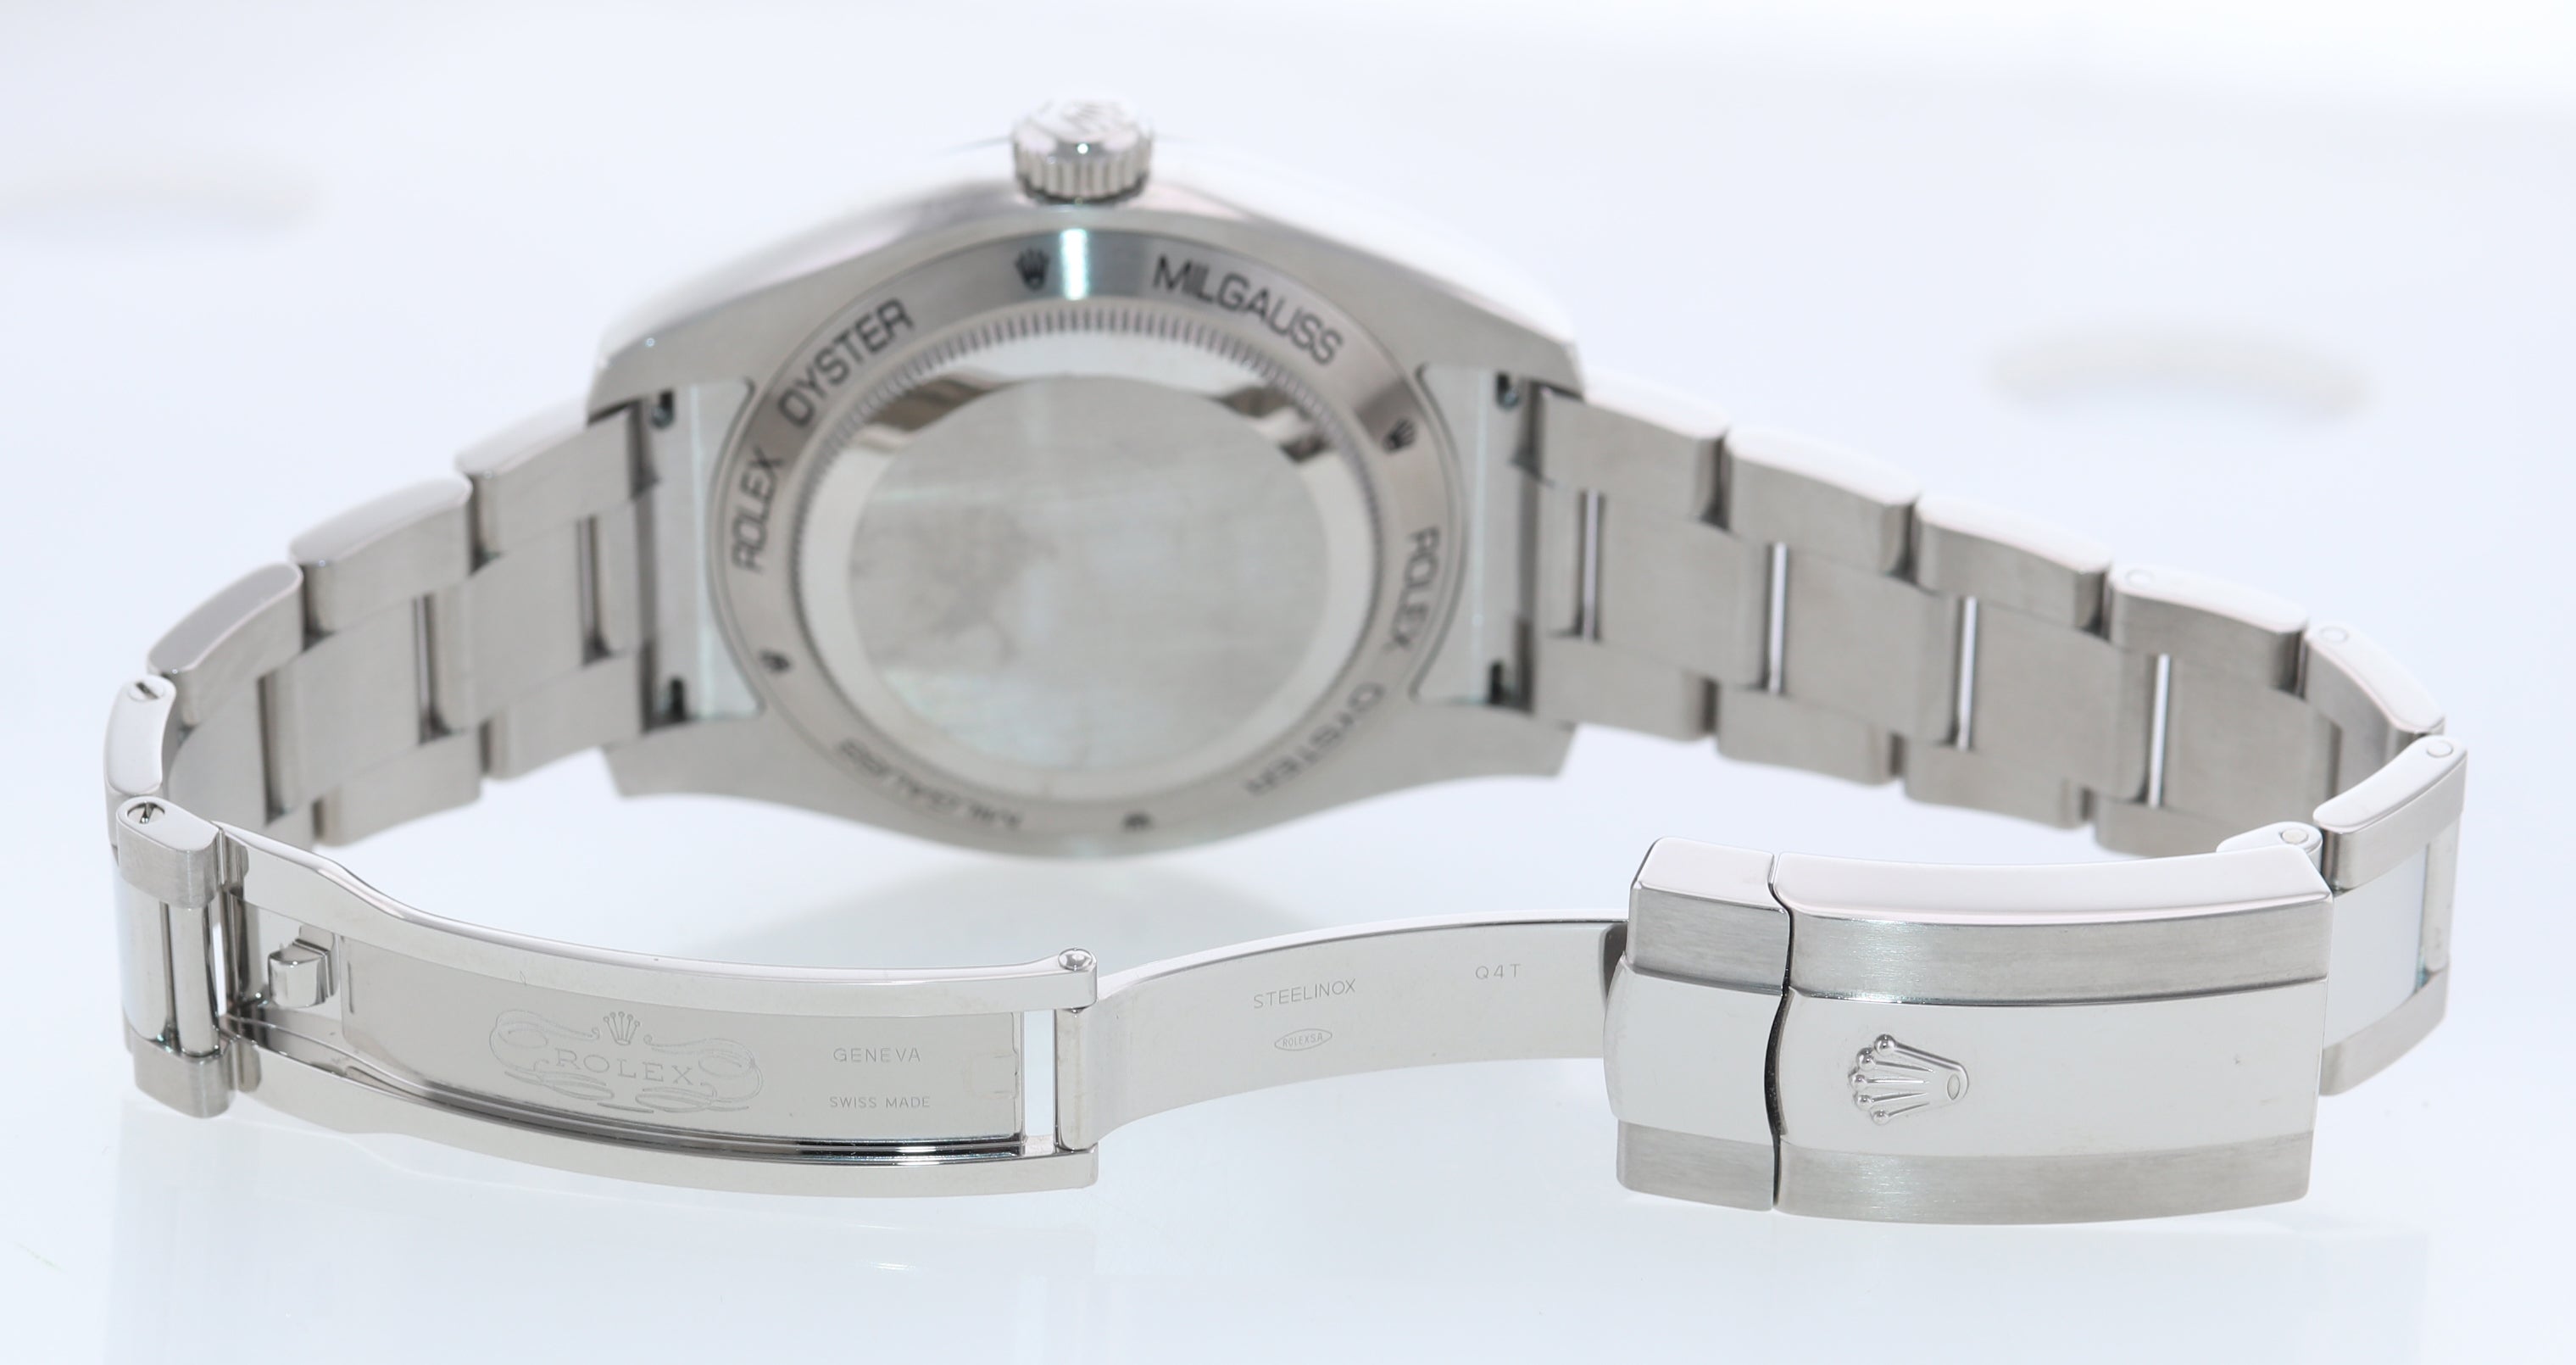 PAPERS Rolex Milgauss Blue Dial Anniversary Green 116400GV Steel Watch Box